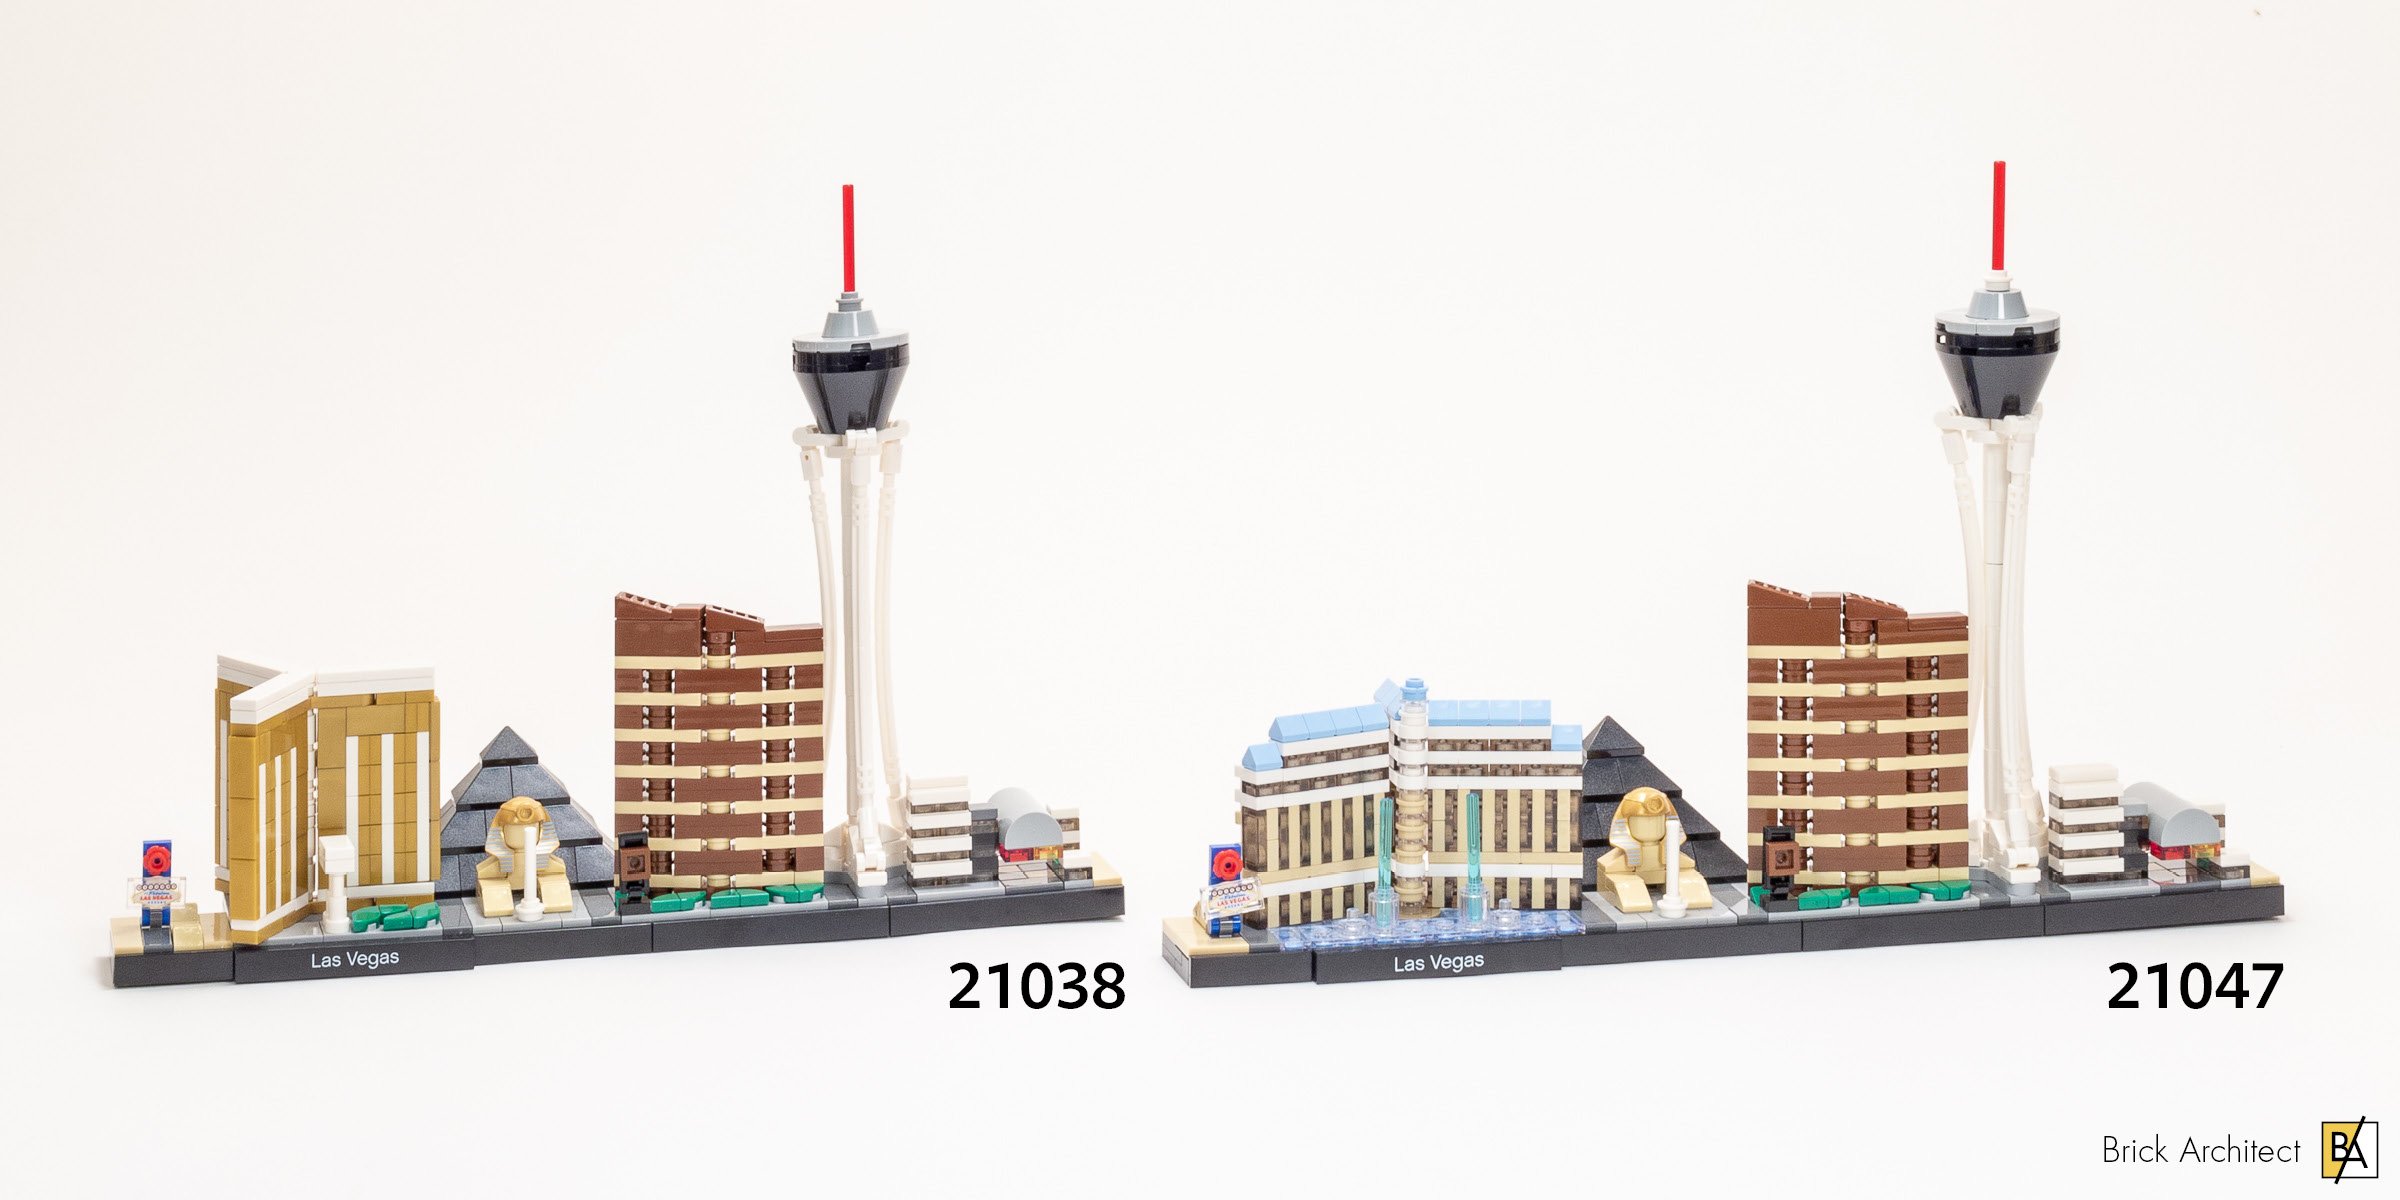 Review: #21038 Las Vegas Skyline (with Mandalay Hotel) - BRICK ARCHITECT